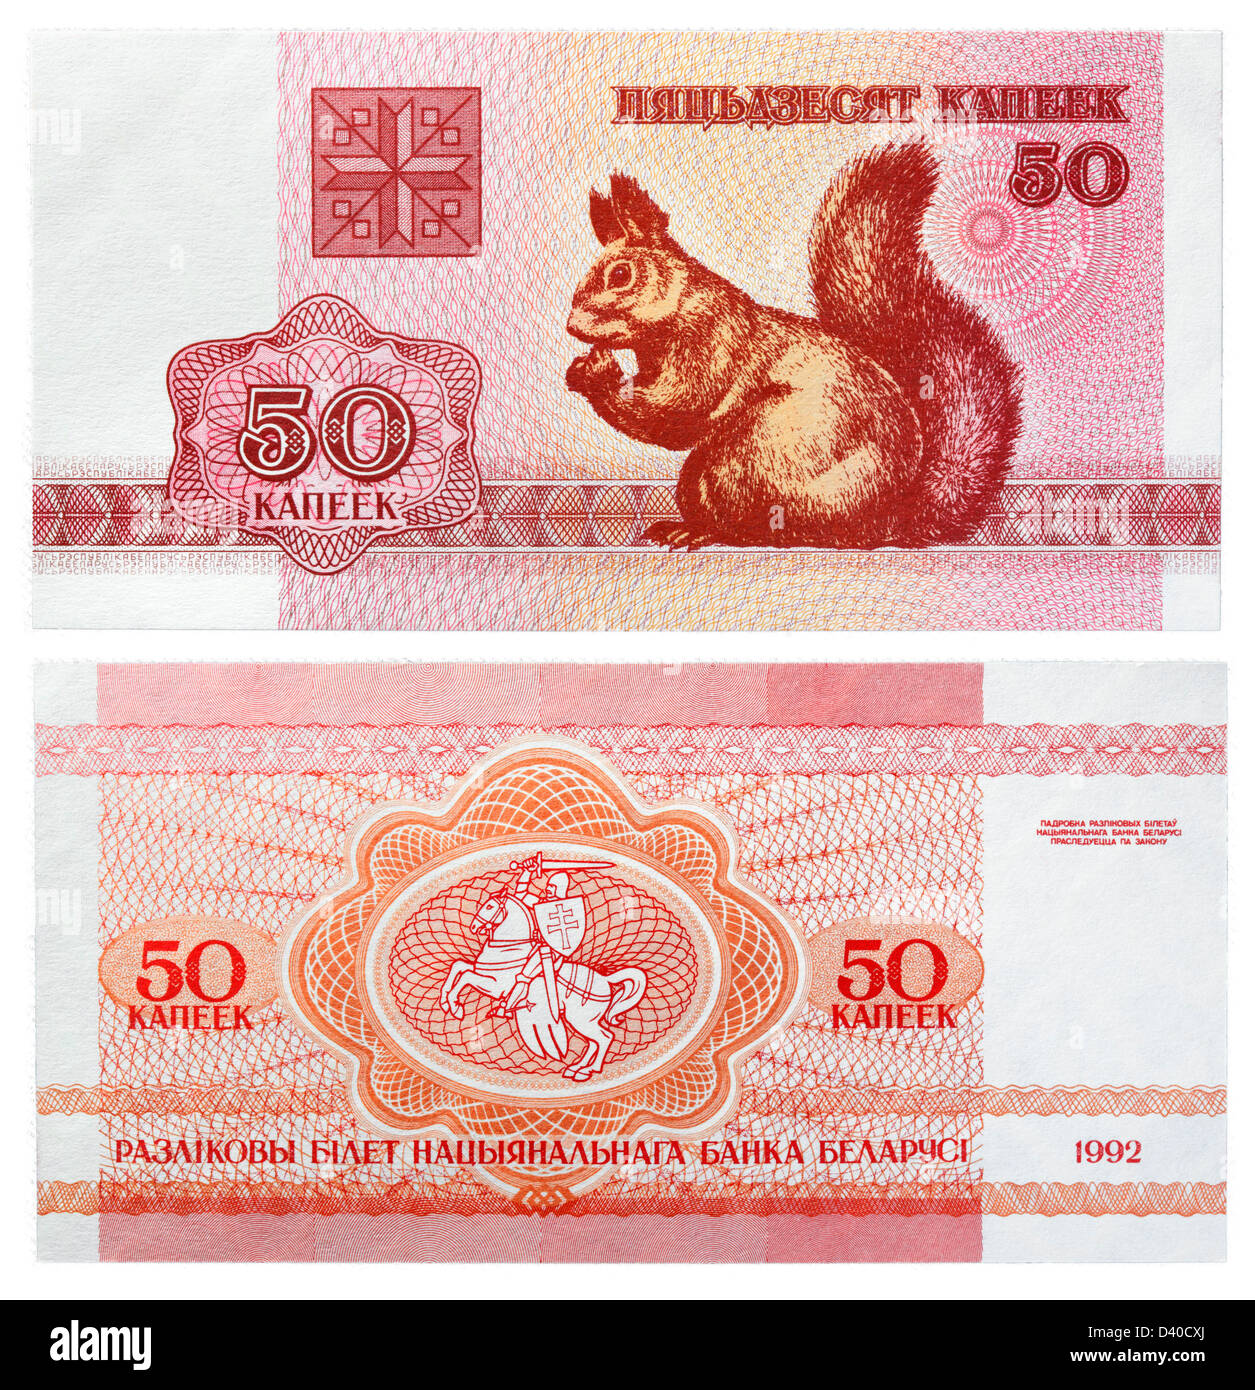 50 Kapeek banknote, Squirrel, Belarus, 1992 Stock Photo